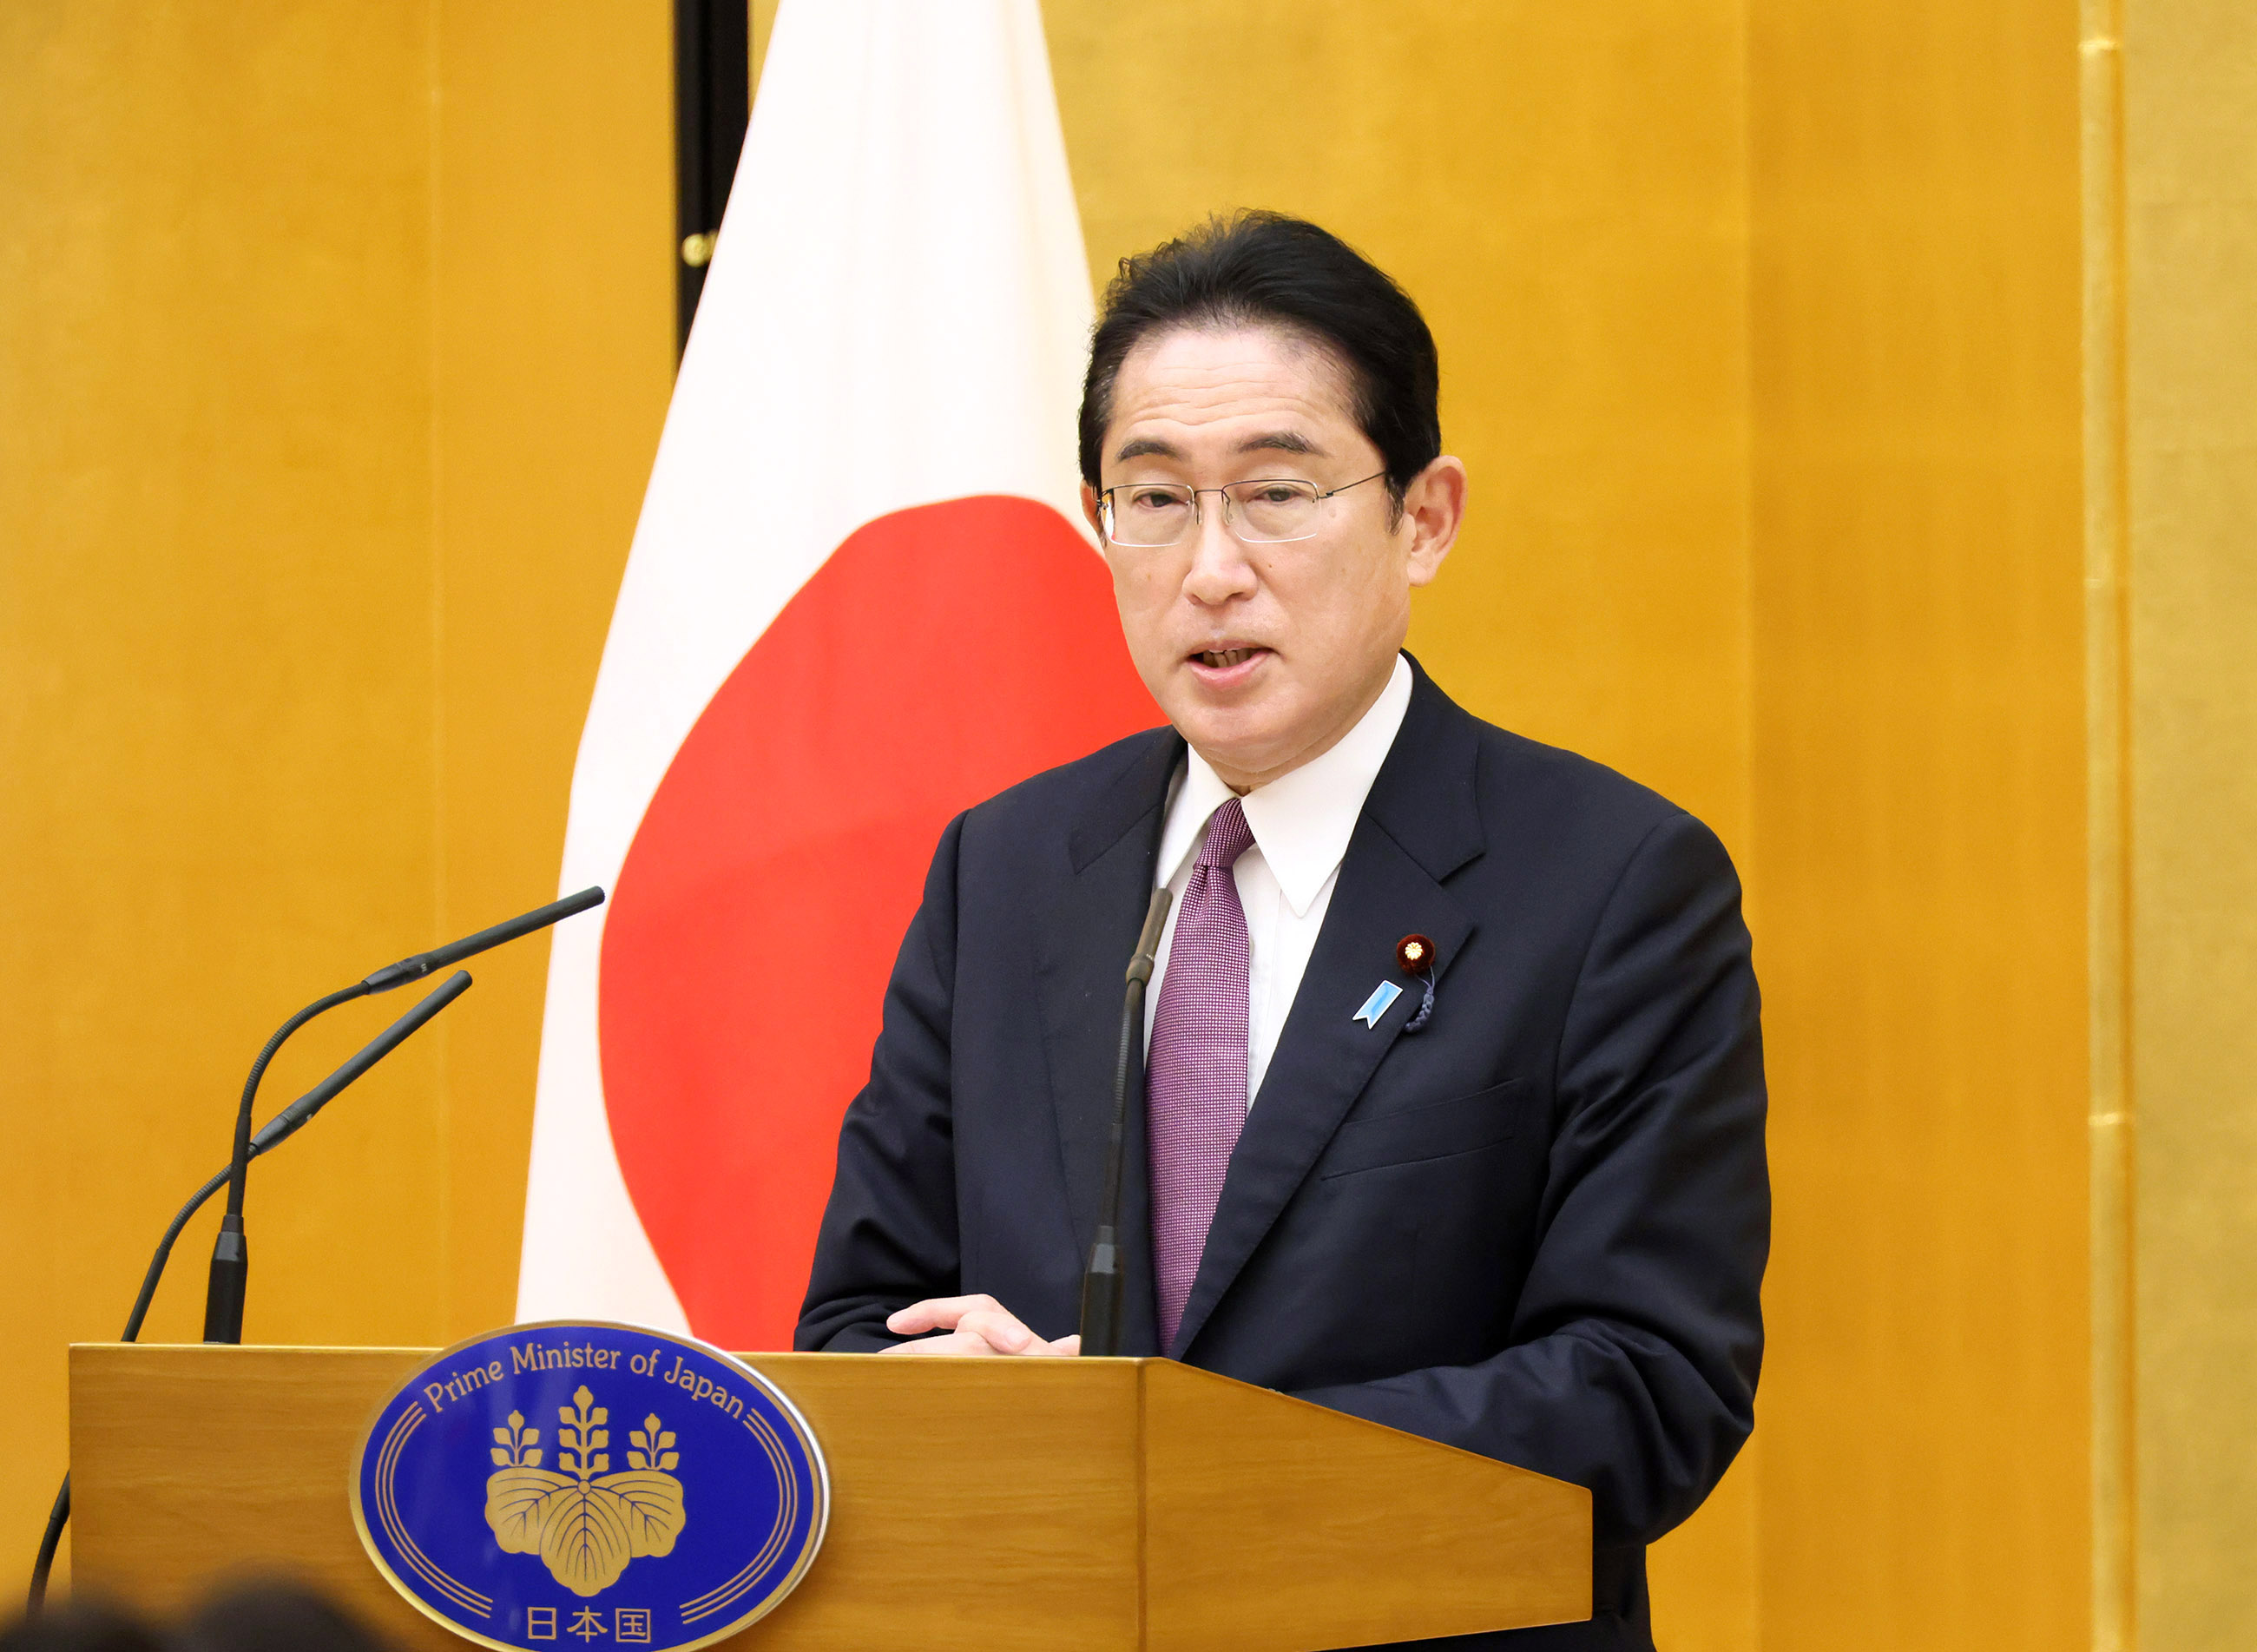 Prime Minister Kishida delivering an address at the award ceremony (1)